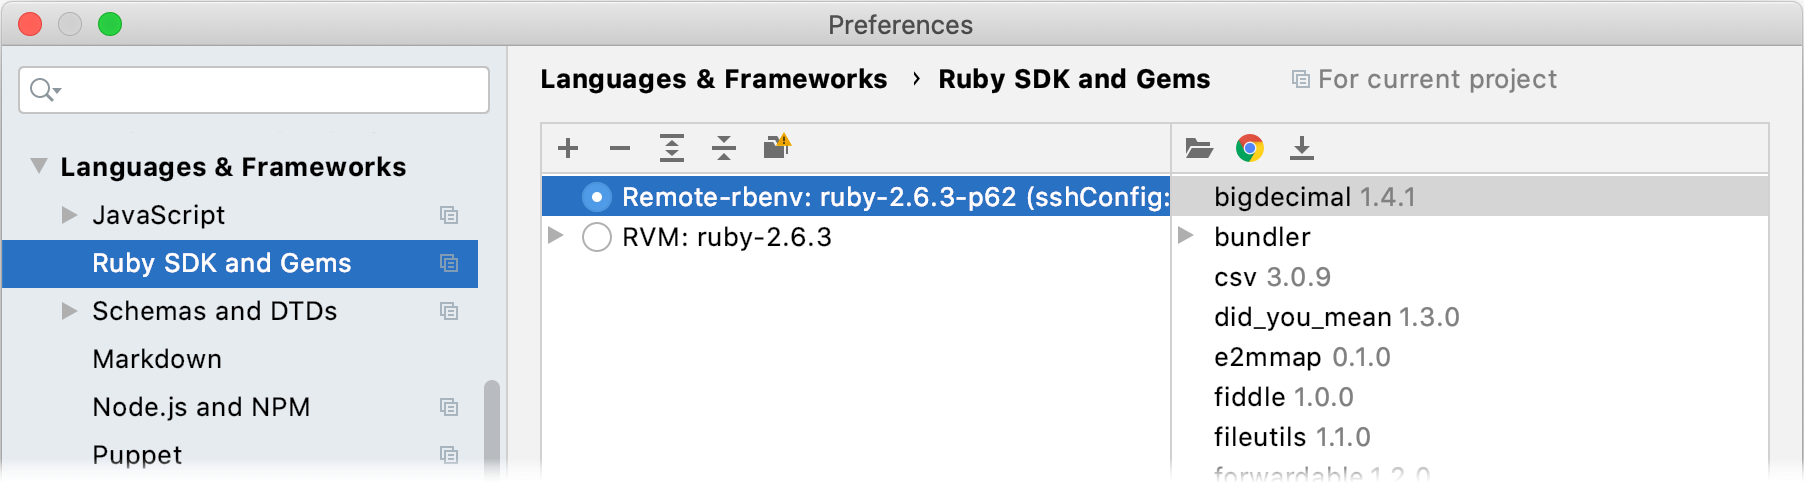 Ruby SDK and Gems